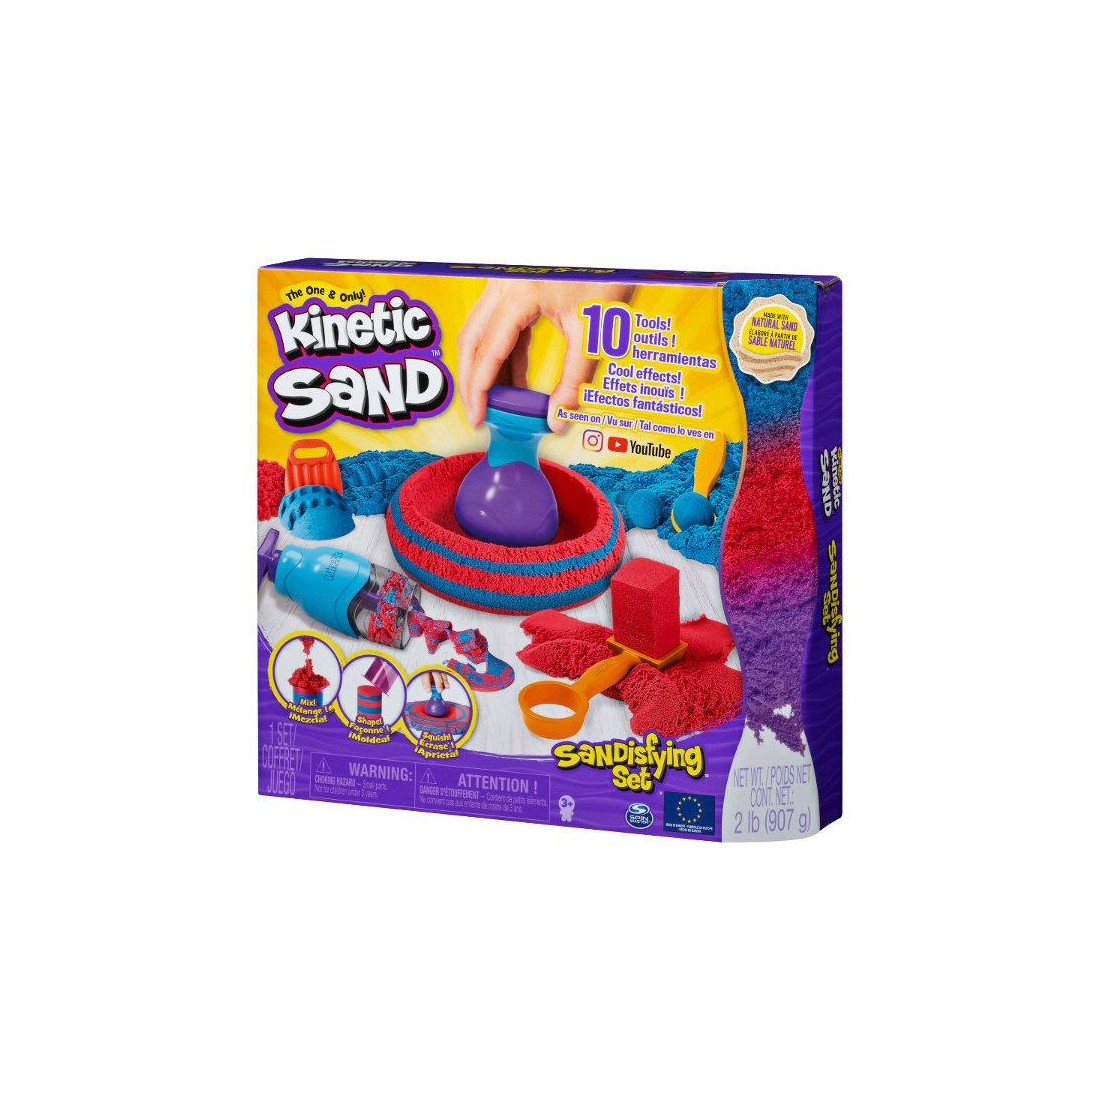 Kinetic Sand - Sandisfying Set - Play set - 907 g - Avec les 10